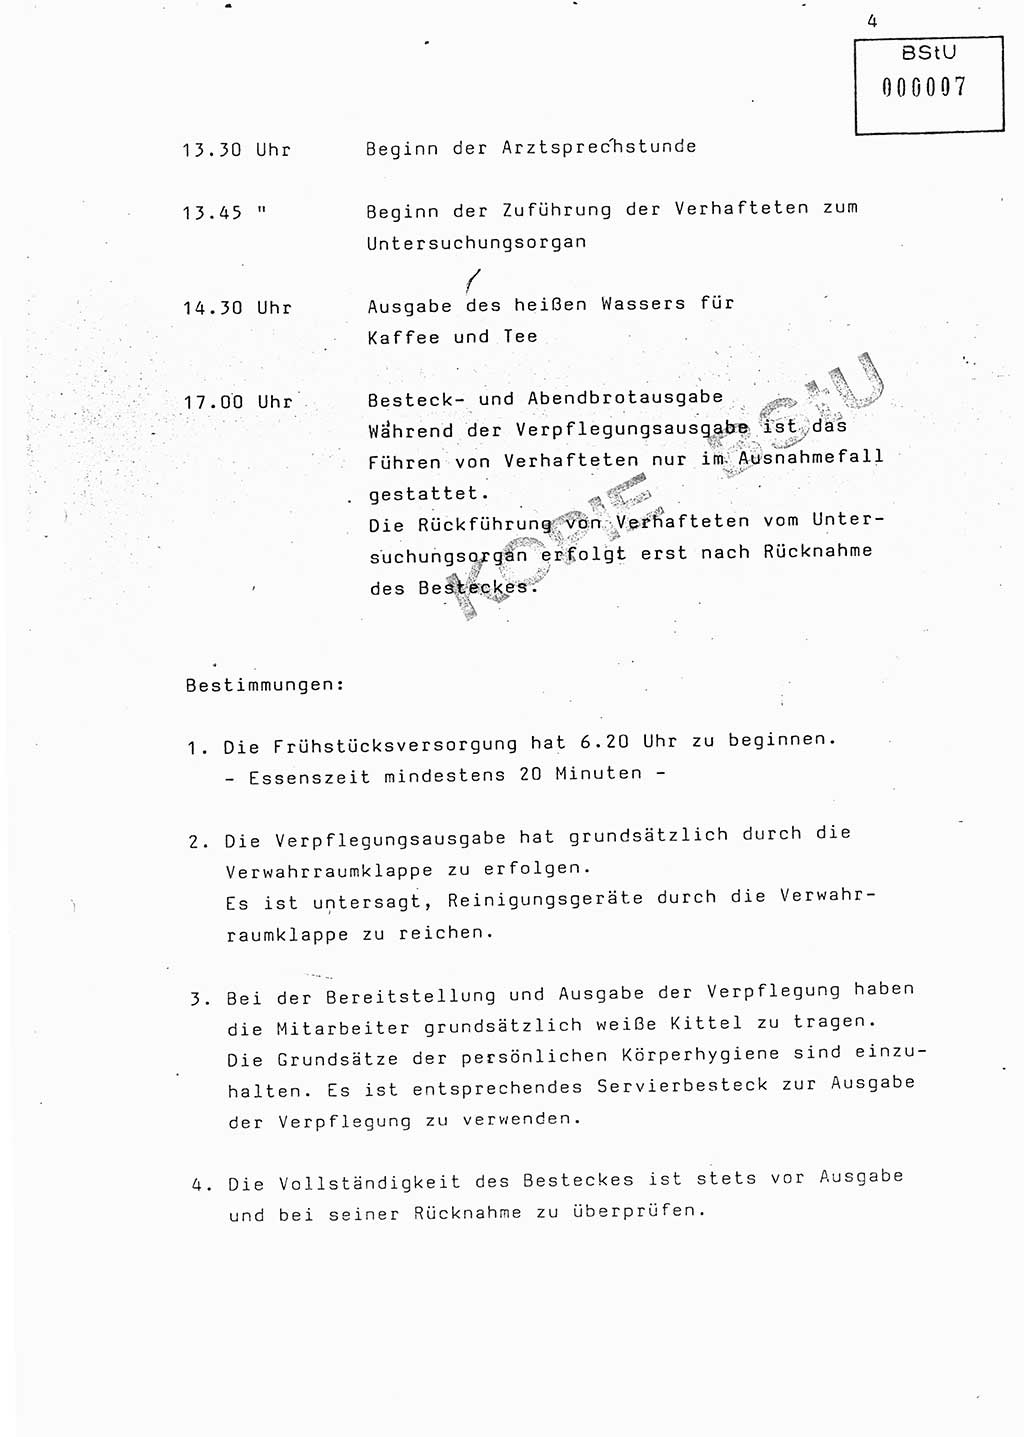 Fachschulabschlußarbeit Oberleutnant Bernd Mekelburg (Abt. ⅩⅣ/2), Oberleutnant Tilo Lilpopp (Abt. ⅩⅣ/2), Ministerium für Staatssicherheit (MfS) [Deutsche Demokratische Republik (DDR)], Abteilung ⅩⅣ, o.D., o.O, o.J., ca. 1986 wg. Bez. DA 1/86, Seite 4 (FS-Abschl.-Arb. MfS DDR Abt. ⅩⅣ 1986, S. 4)